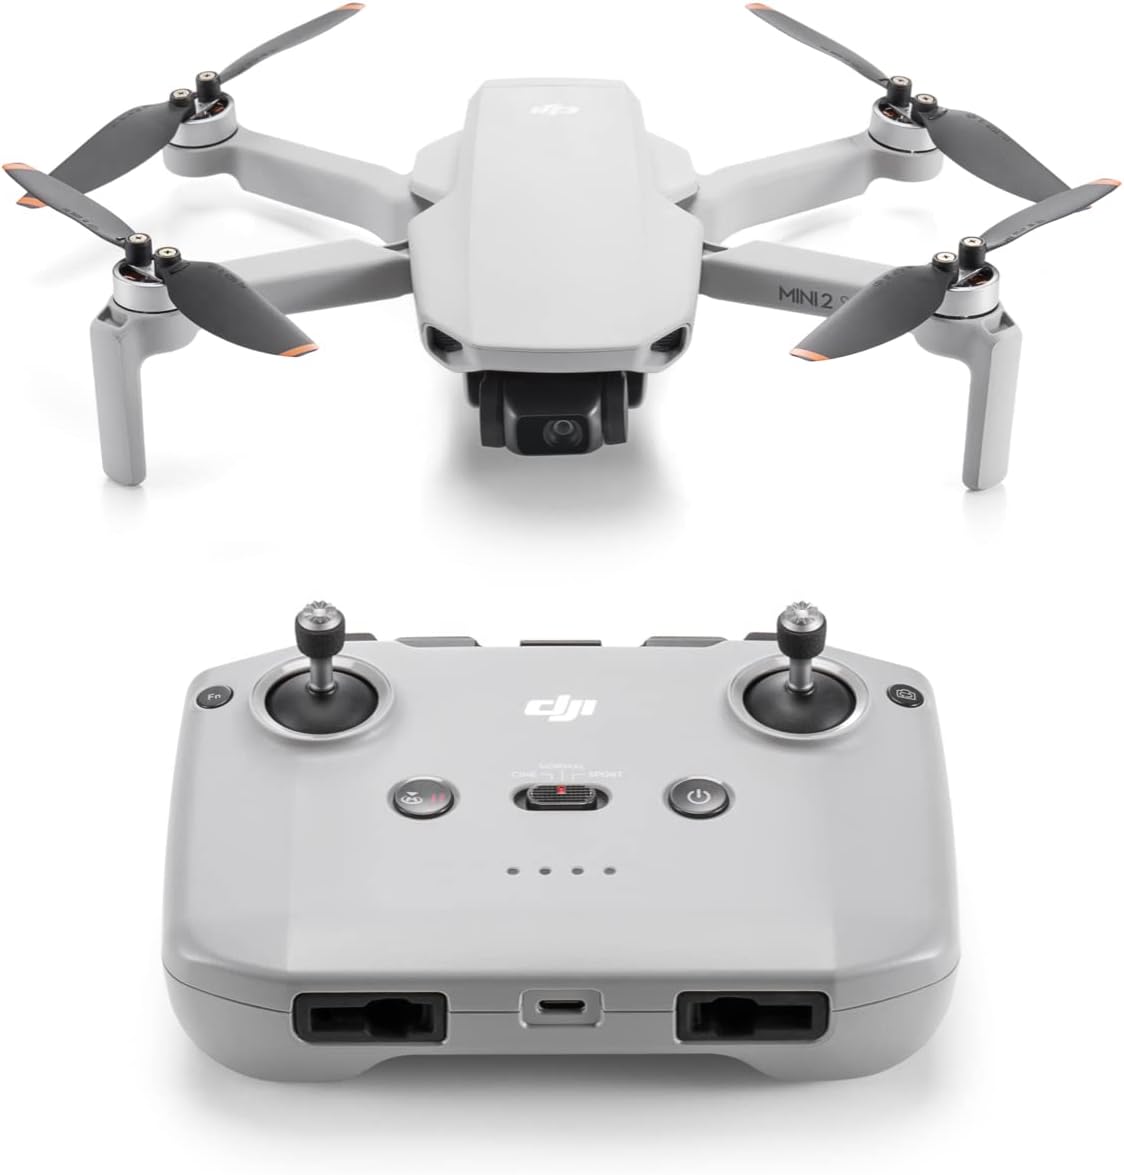 DJI Mini 2 SE, Lightweight Mini Drone with QHD Video
Click for details: amzn.to/4atKTae

#amazon #drone #dronecamera #dji